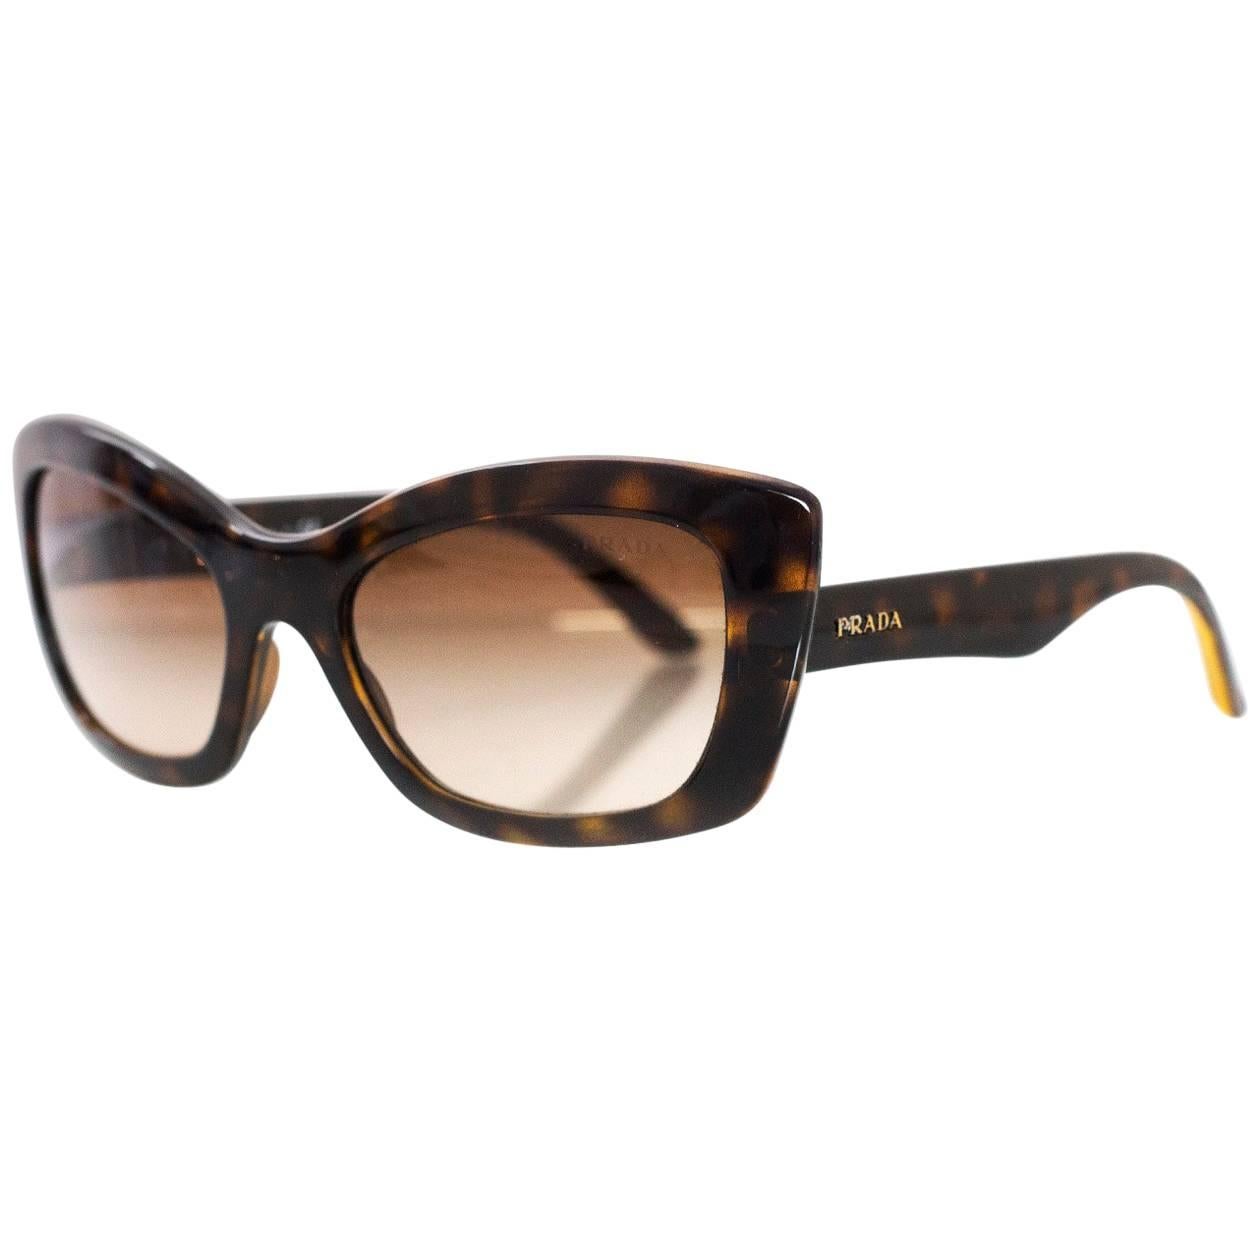 Prada Brown Tortoise Sunglasses with Case